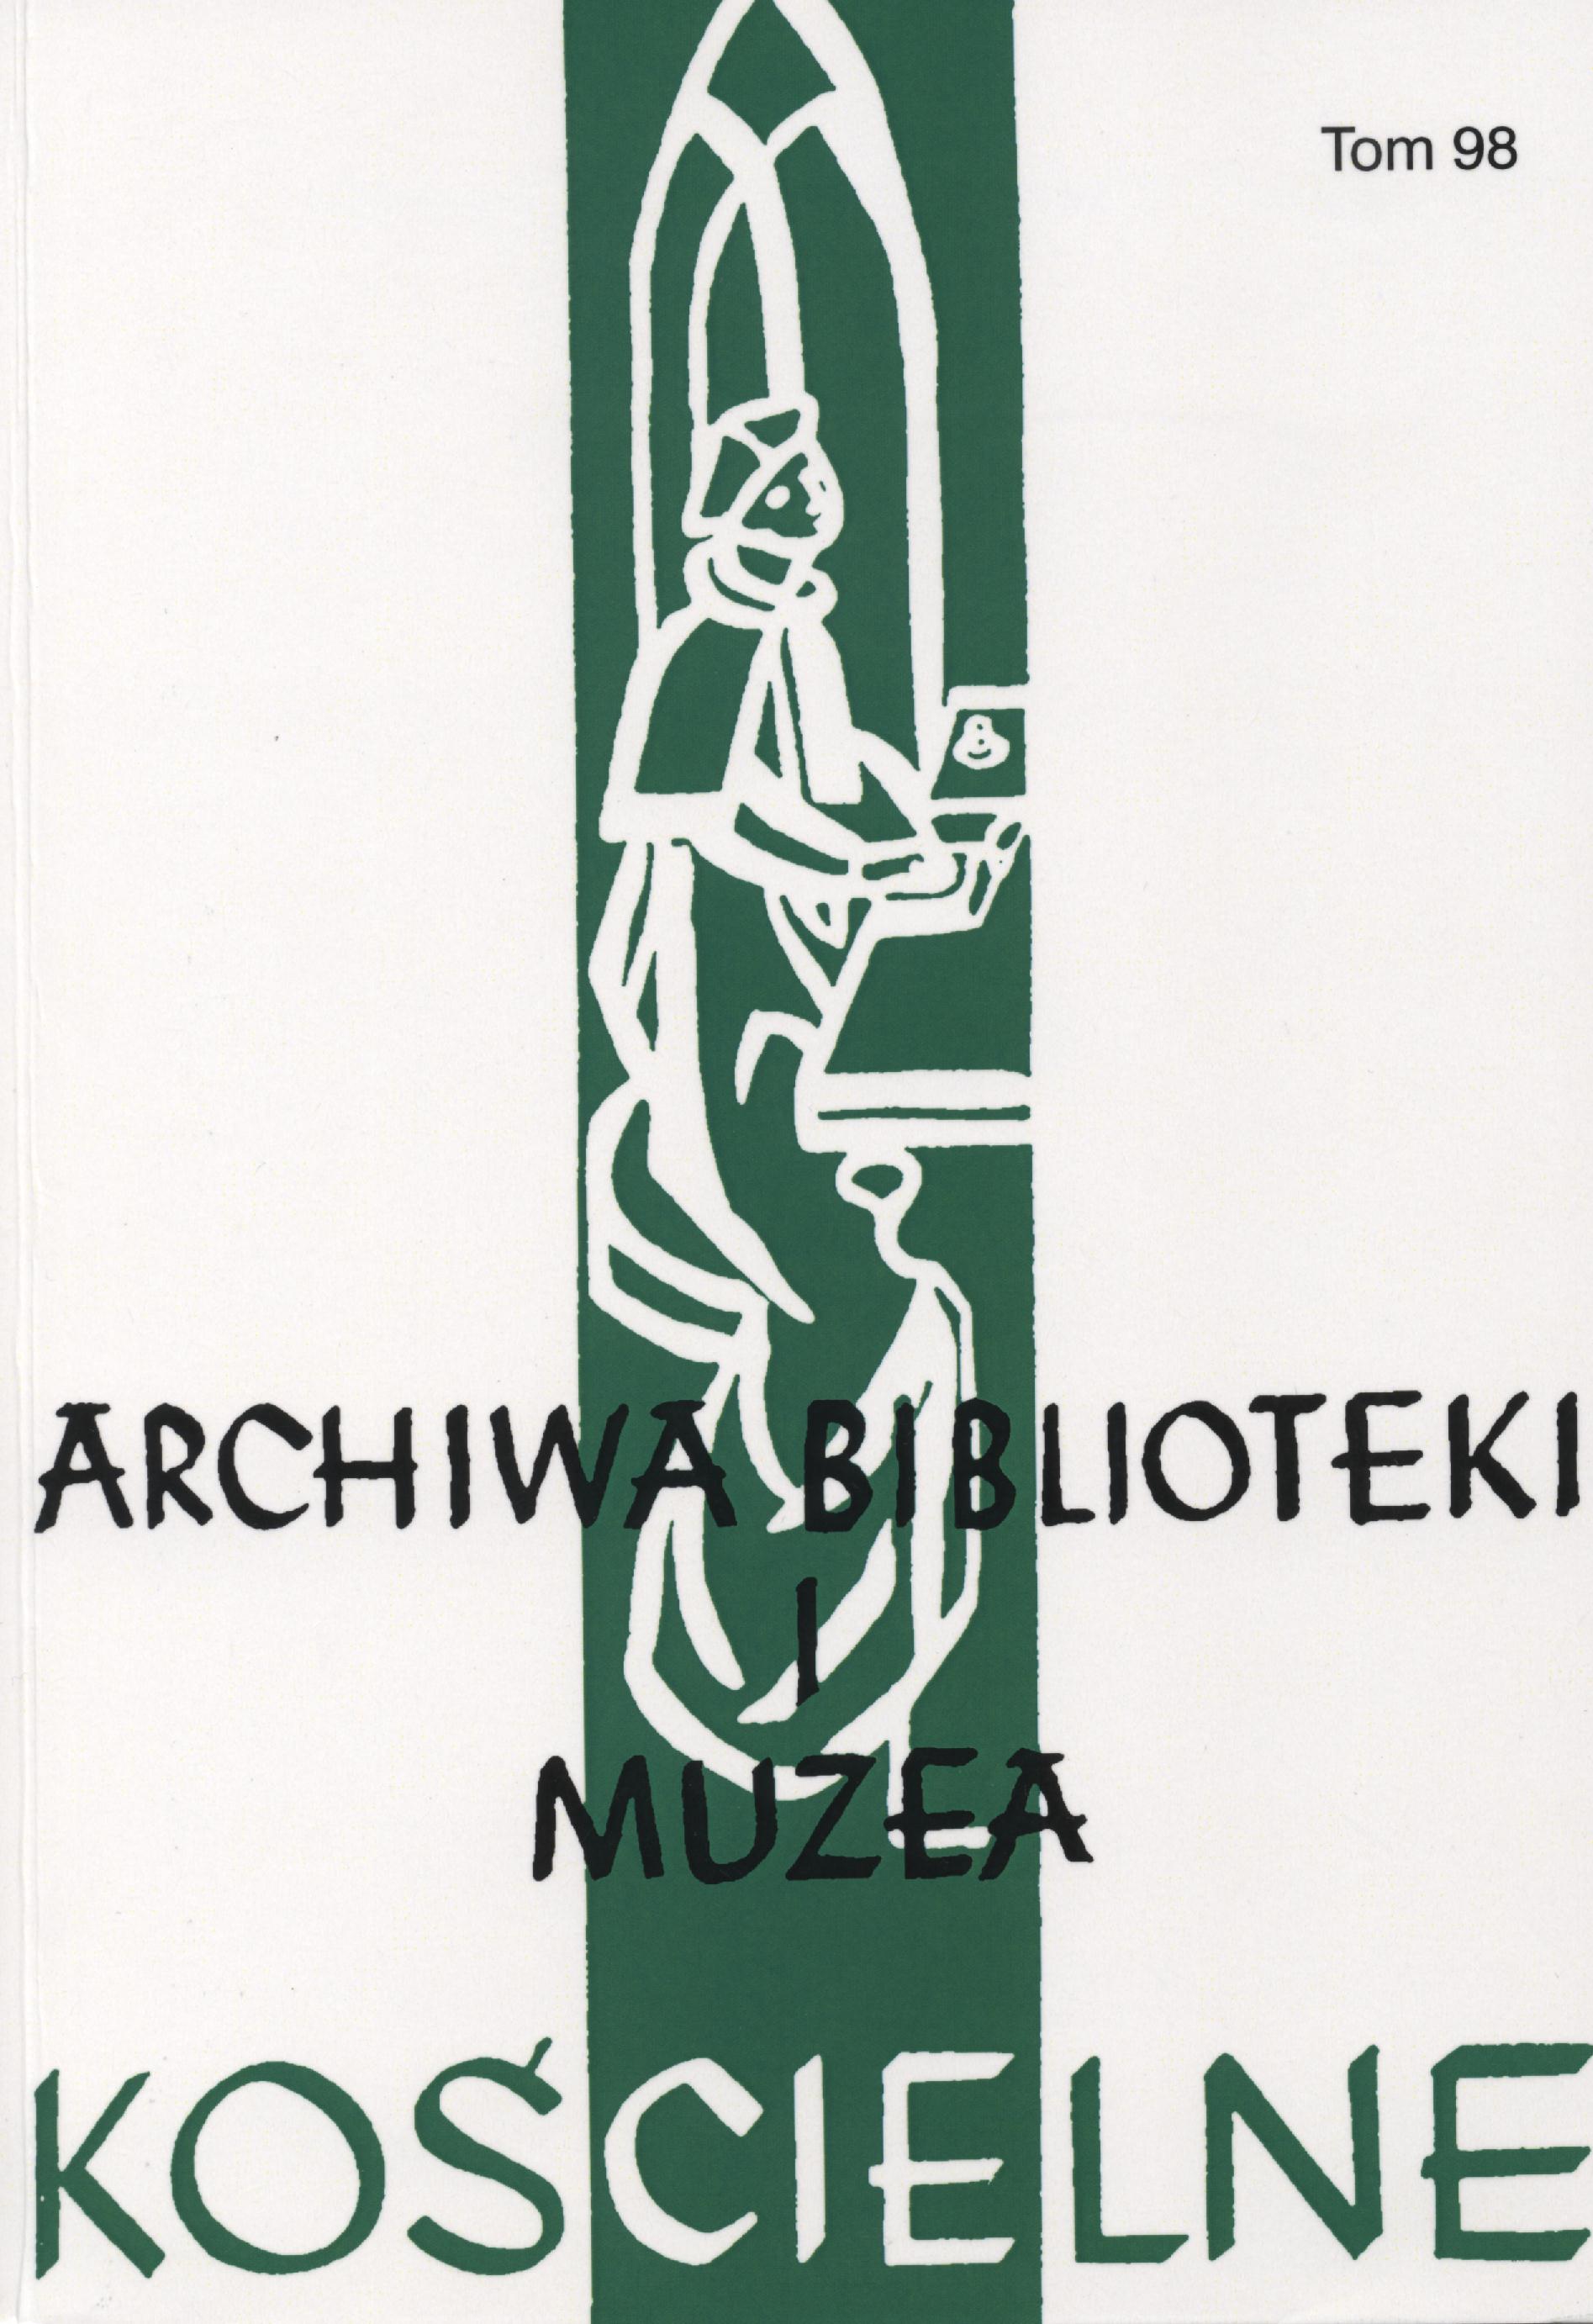 Archiwa, Biblioteki i Muzea Kościelne